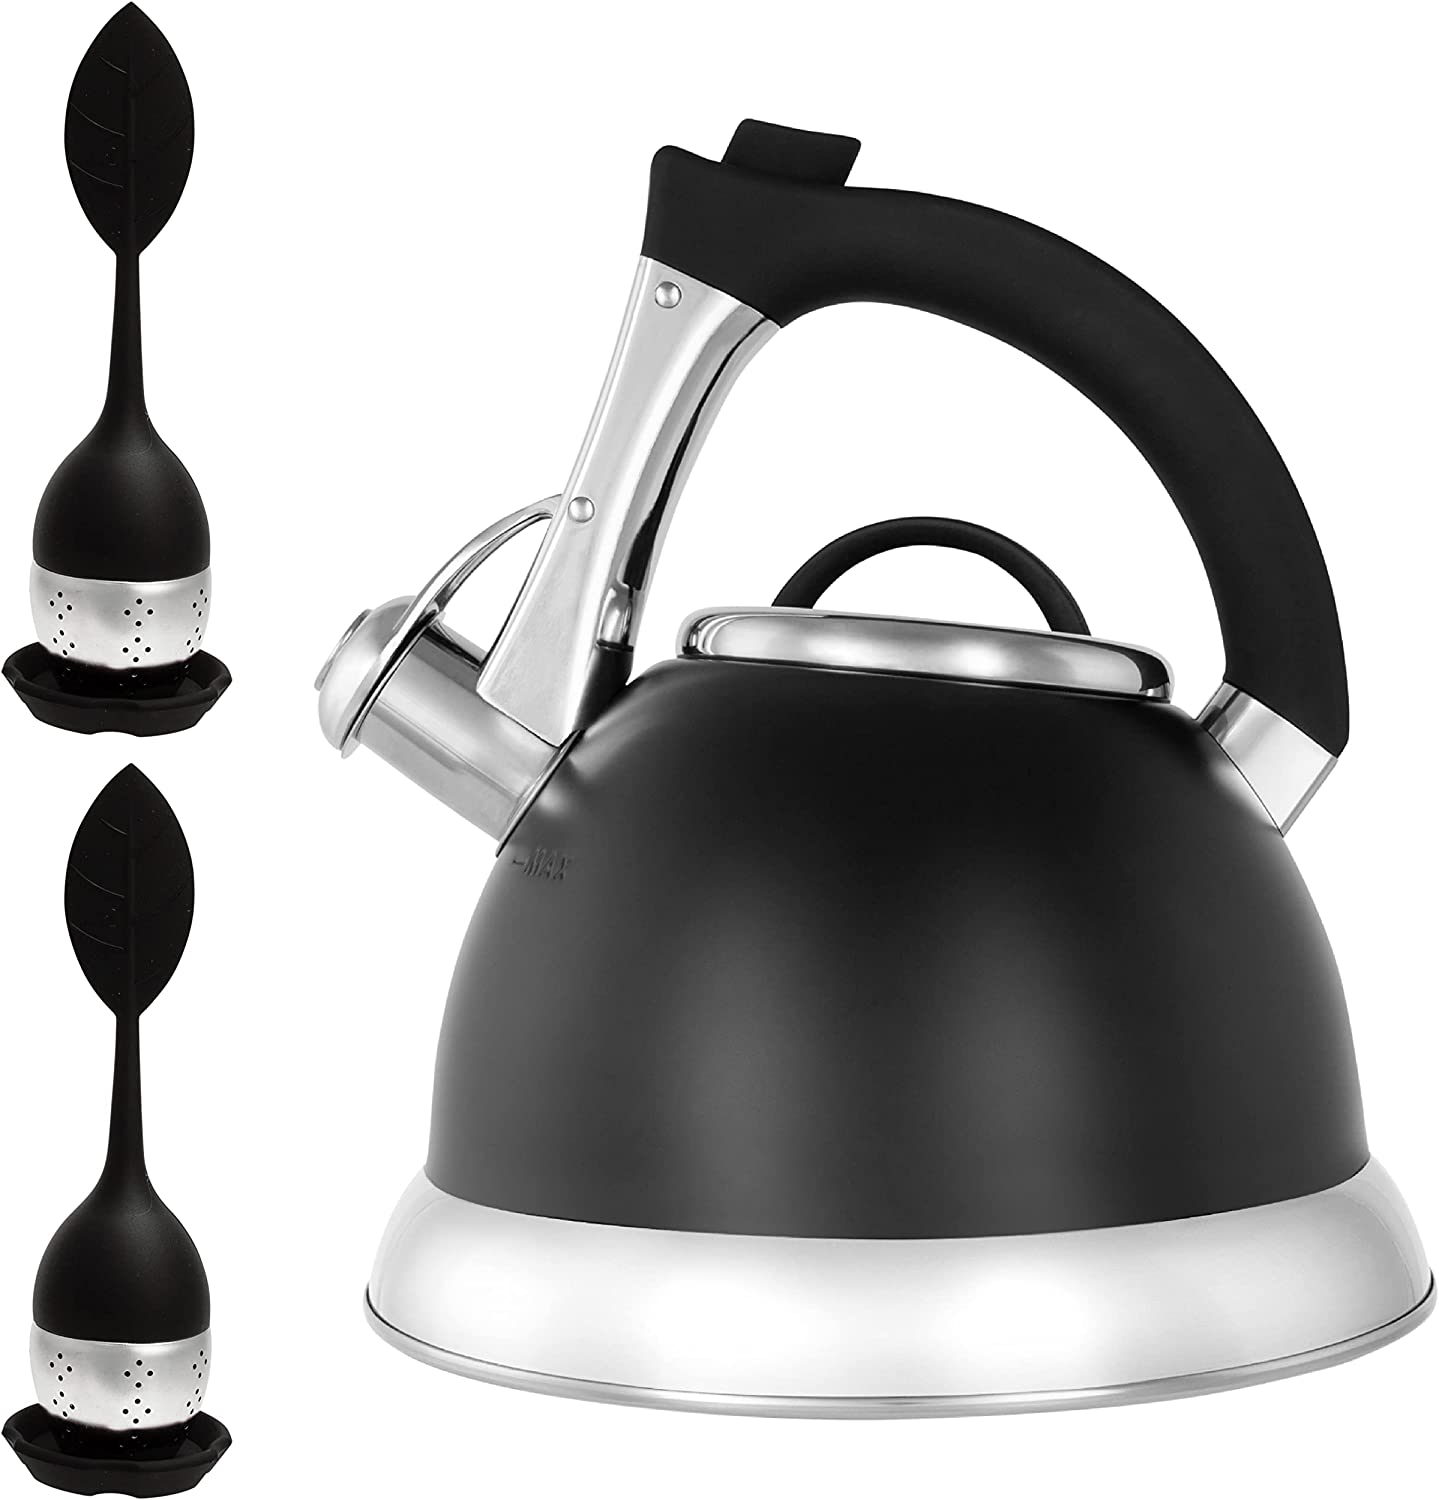 https://www.dontwasteyourmoney.com/wp-content/uploads/2020/03/toptier-cast-iron-infuser-enameled-interior-tea-pot-kettle-22-ounce-1.jpg